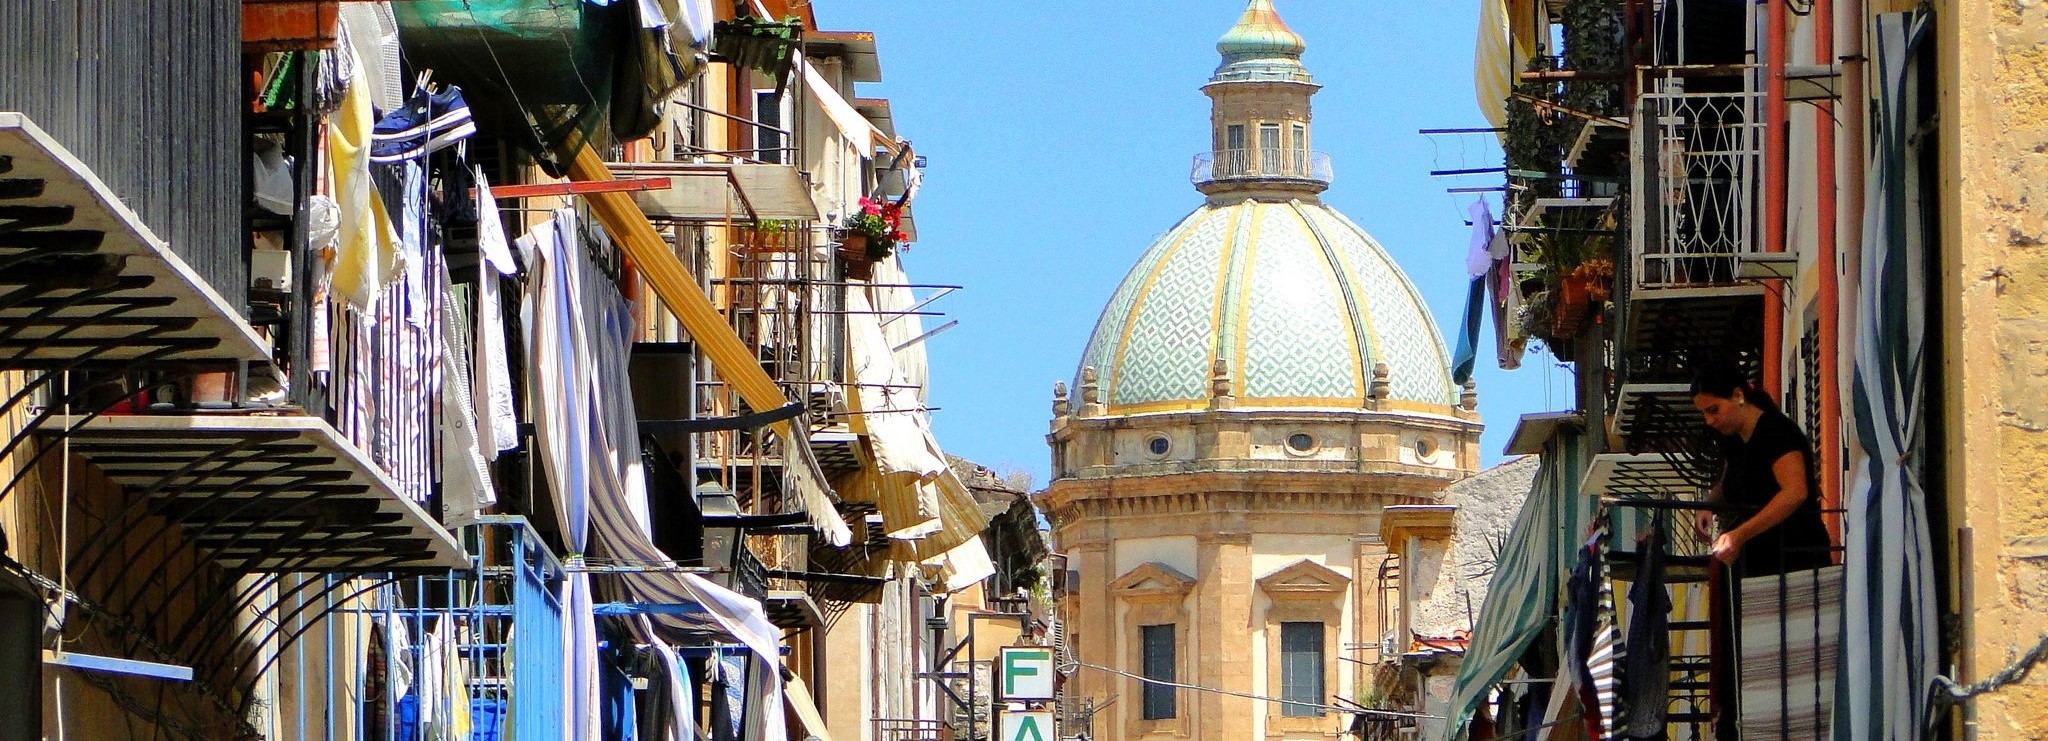 Palermo - foto di santiago lopez-pastor